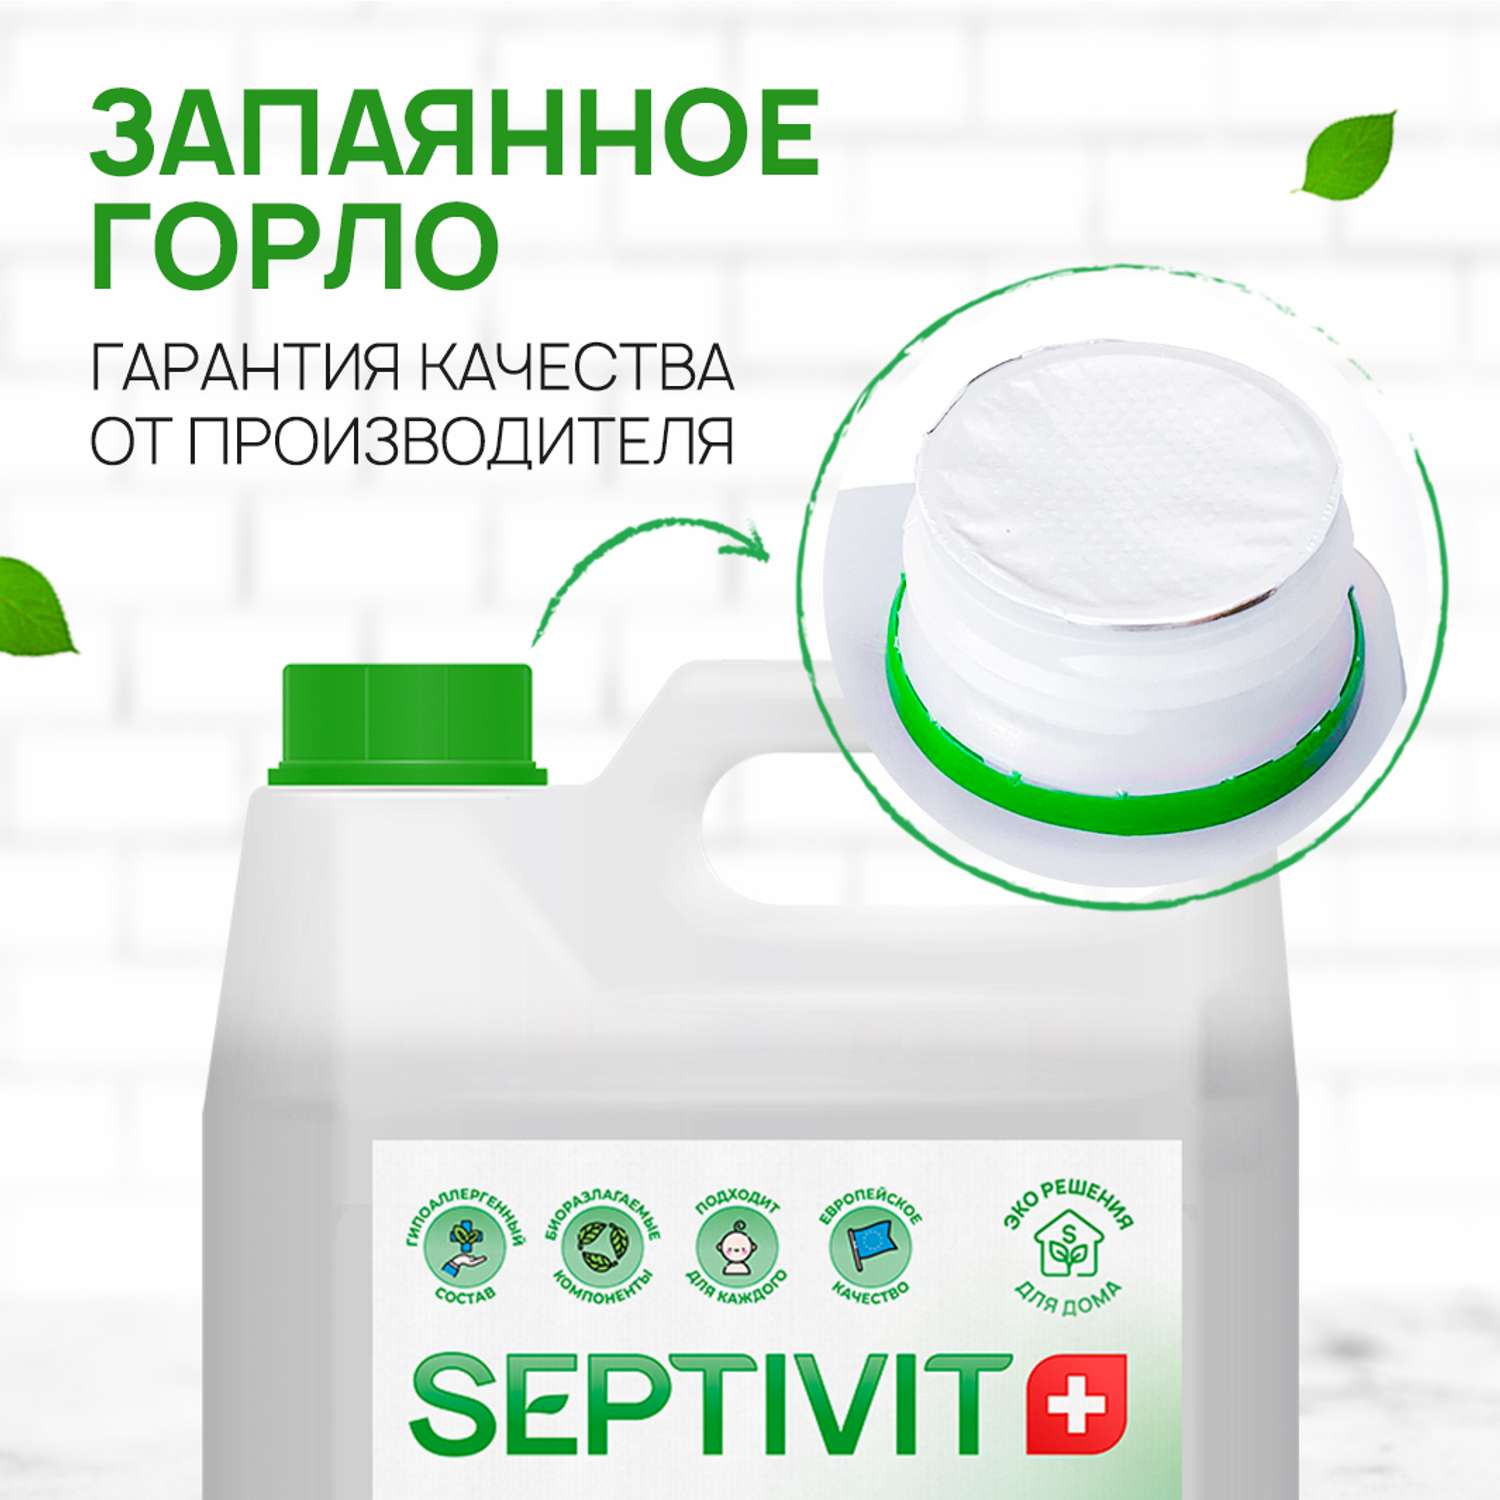 Жидкое мыло SEPTIVIT Premium Лаванда 5 л - фото 5